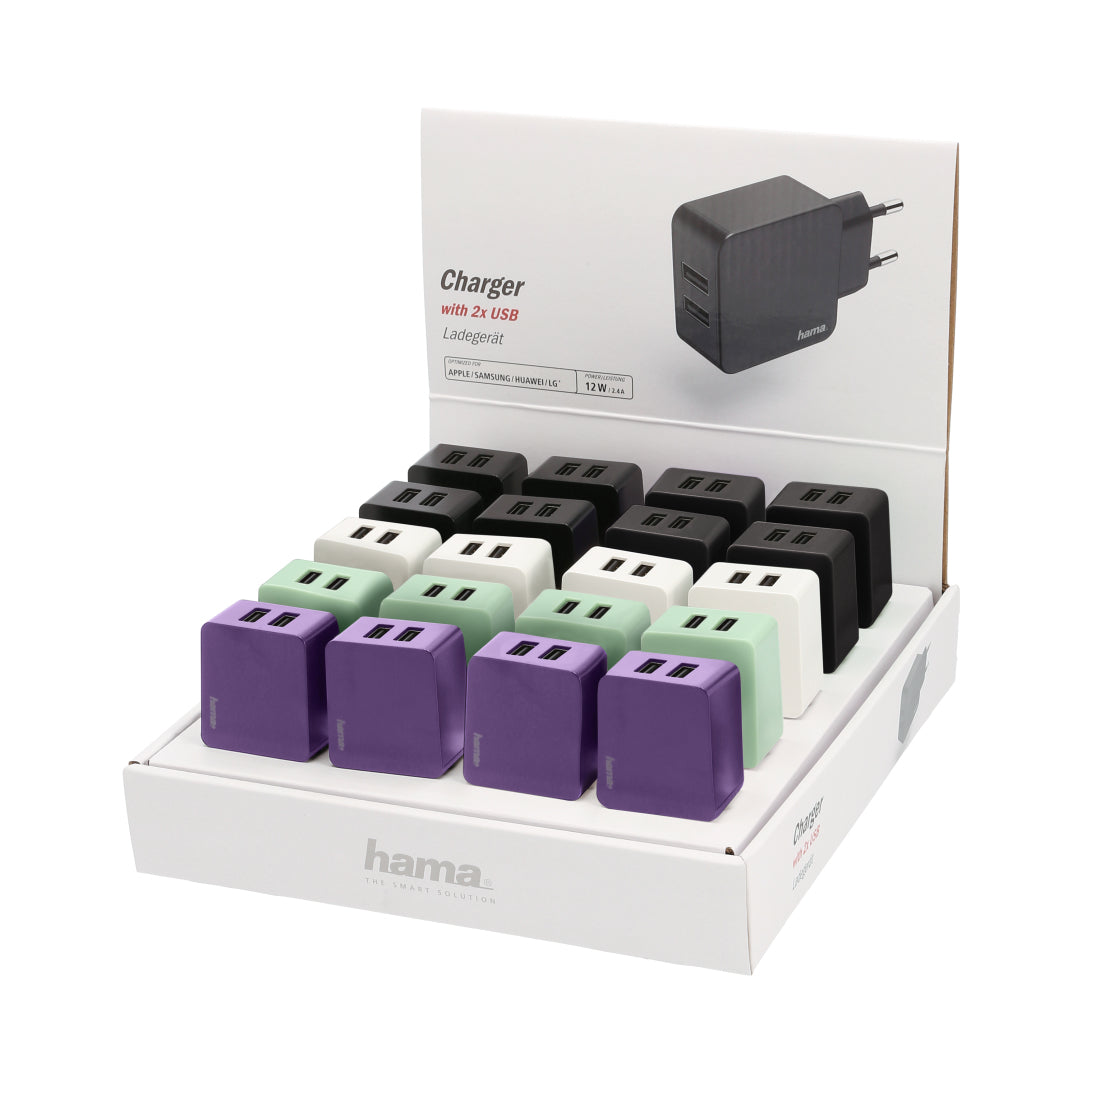 BOX HAMA Charger 220V 2USB, 2.4A (8xBlack;4xWhite;4xGreen;4xPurple) - 00210540